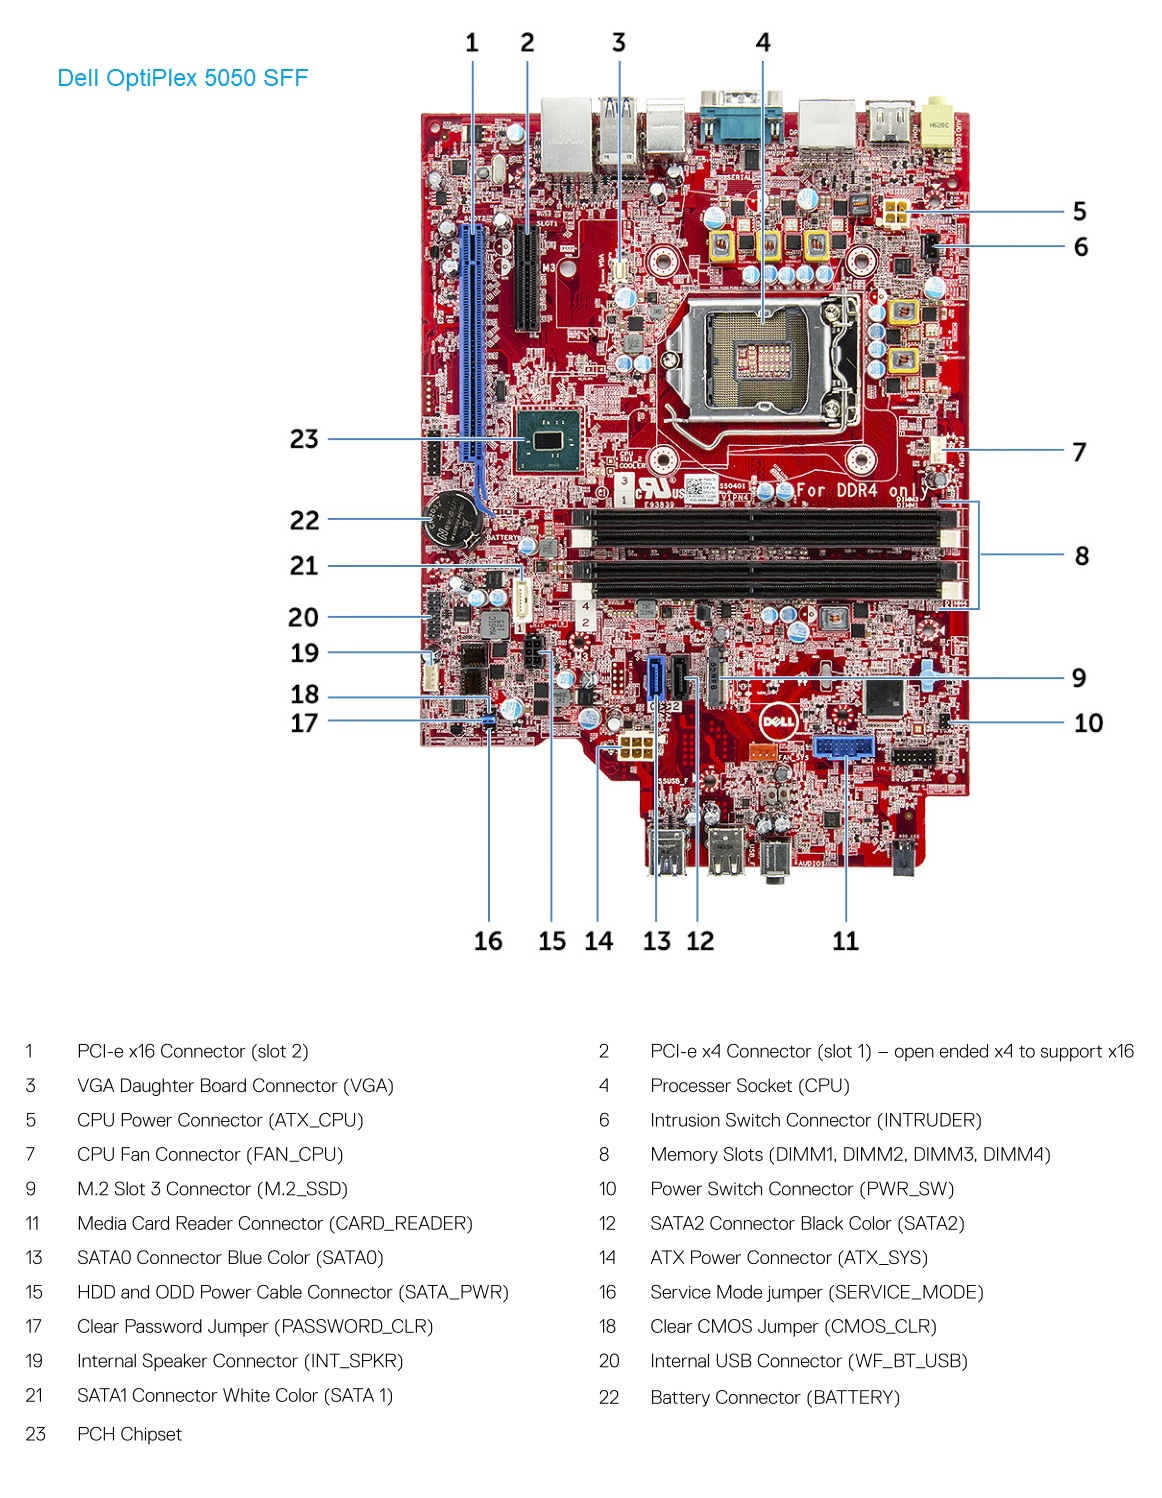 Dell OptiPlex 5050 SFF – Specs and upgrade options